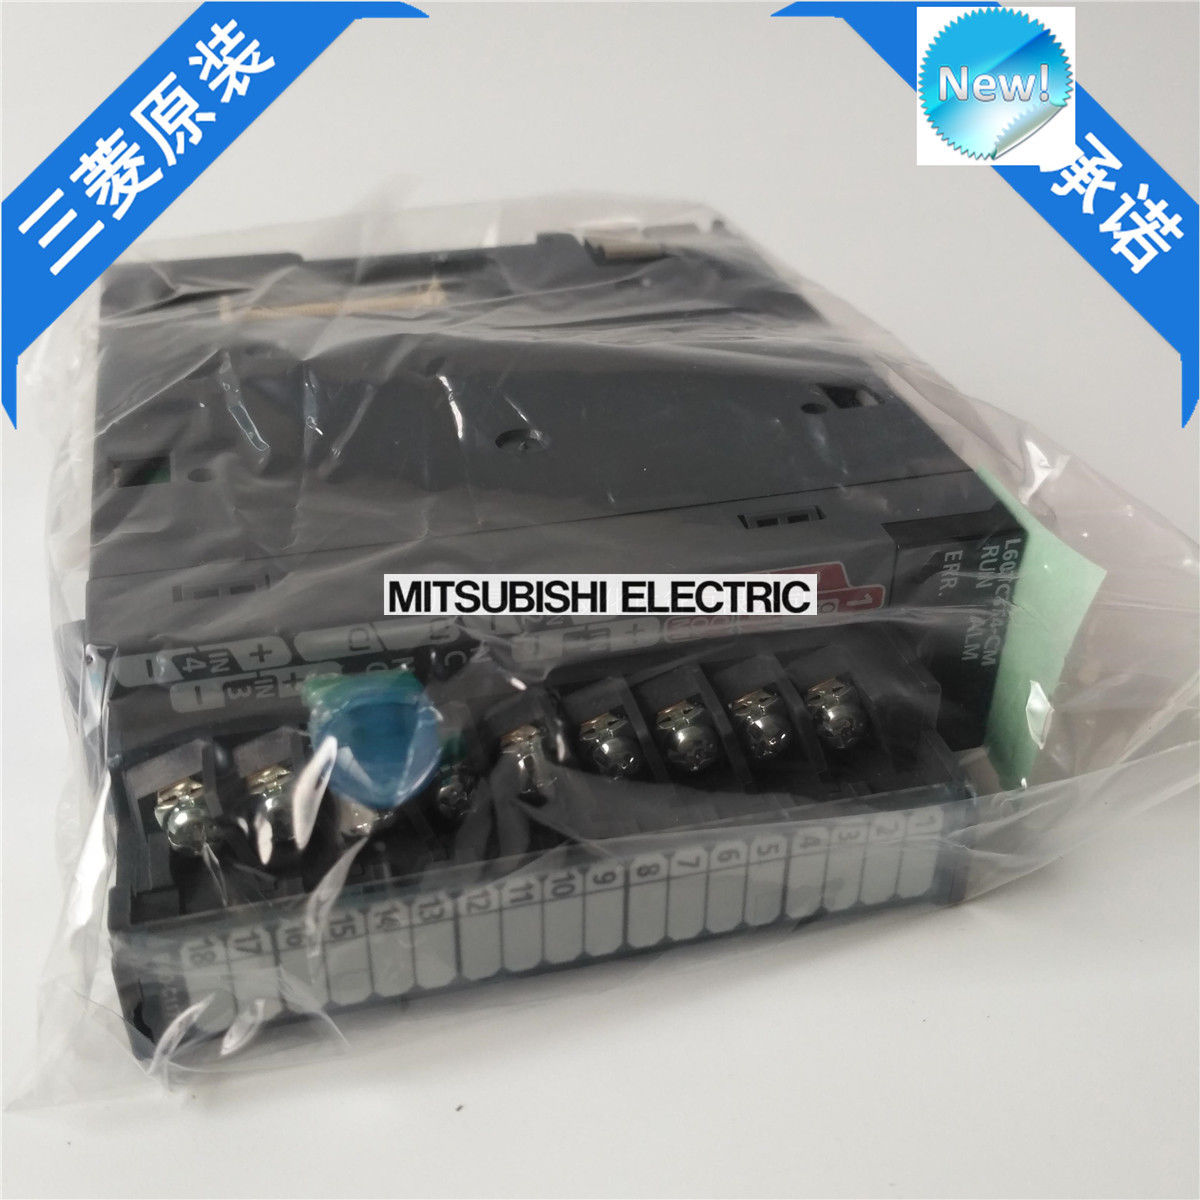 Brand New Mitsubishi PLC L60TCTT4-CM In Box L60TCTT4CM - Click Image to Close